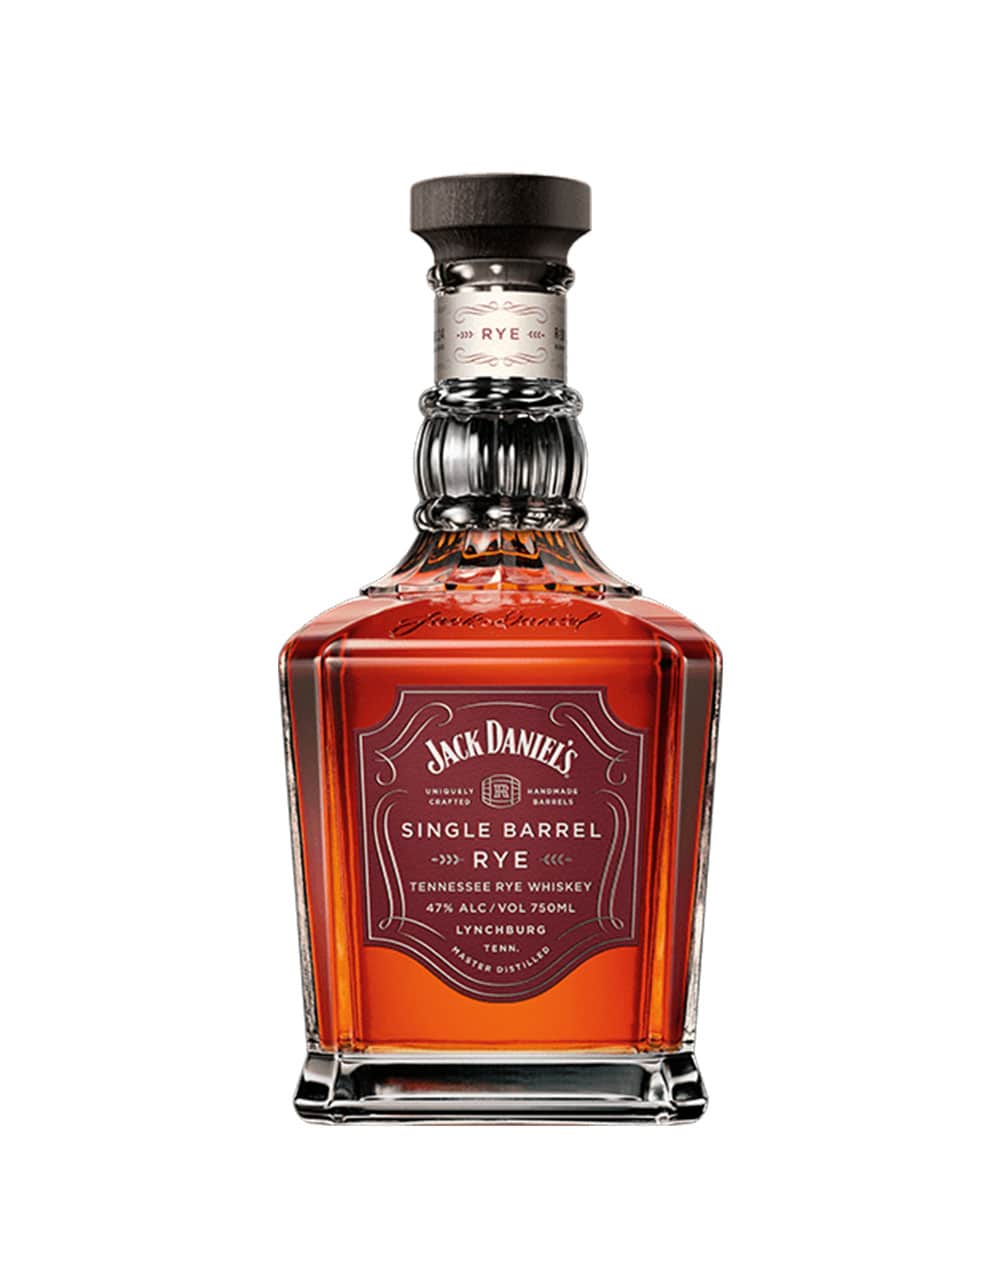 Jack Daniels Single Barrel Tennessee Rye whiskey